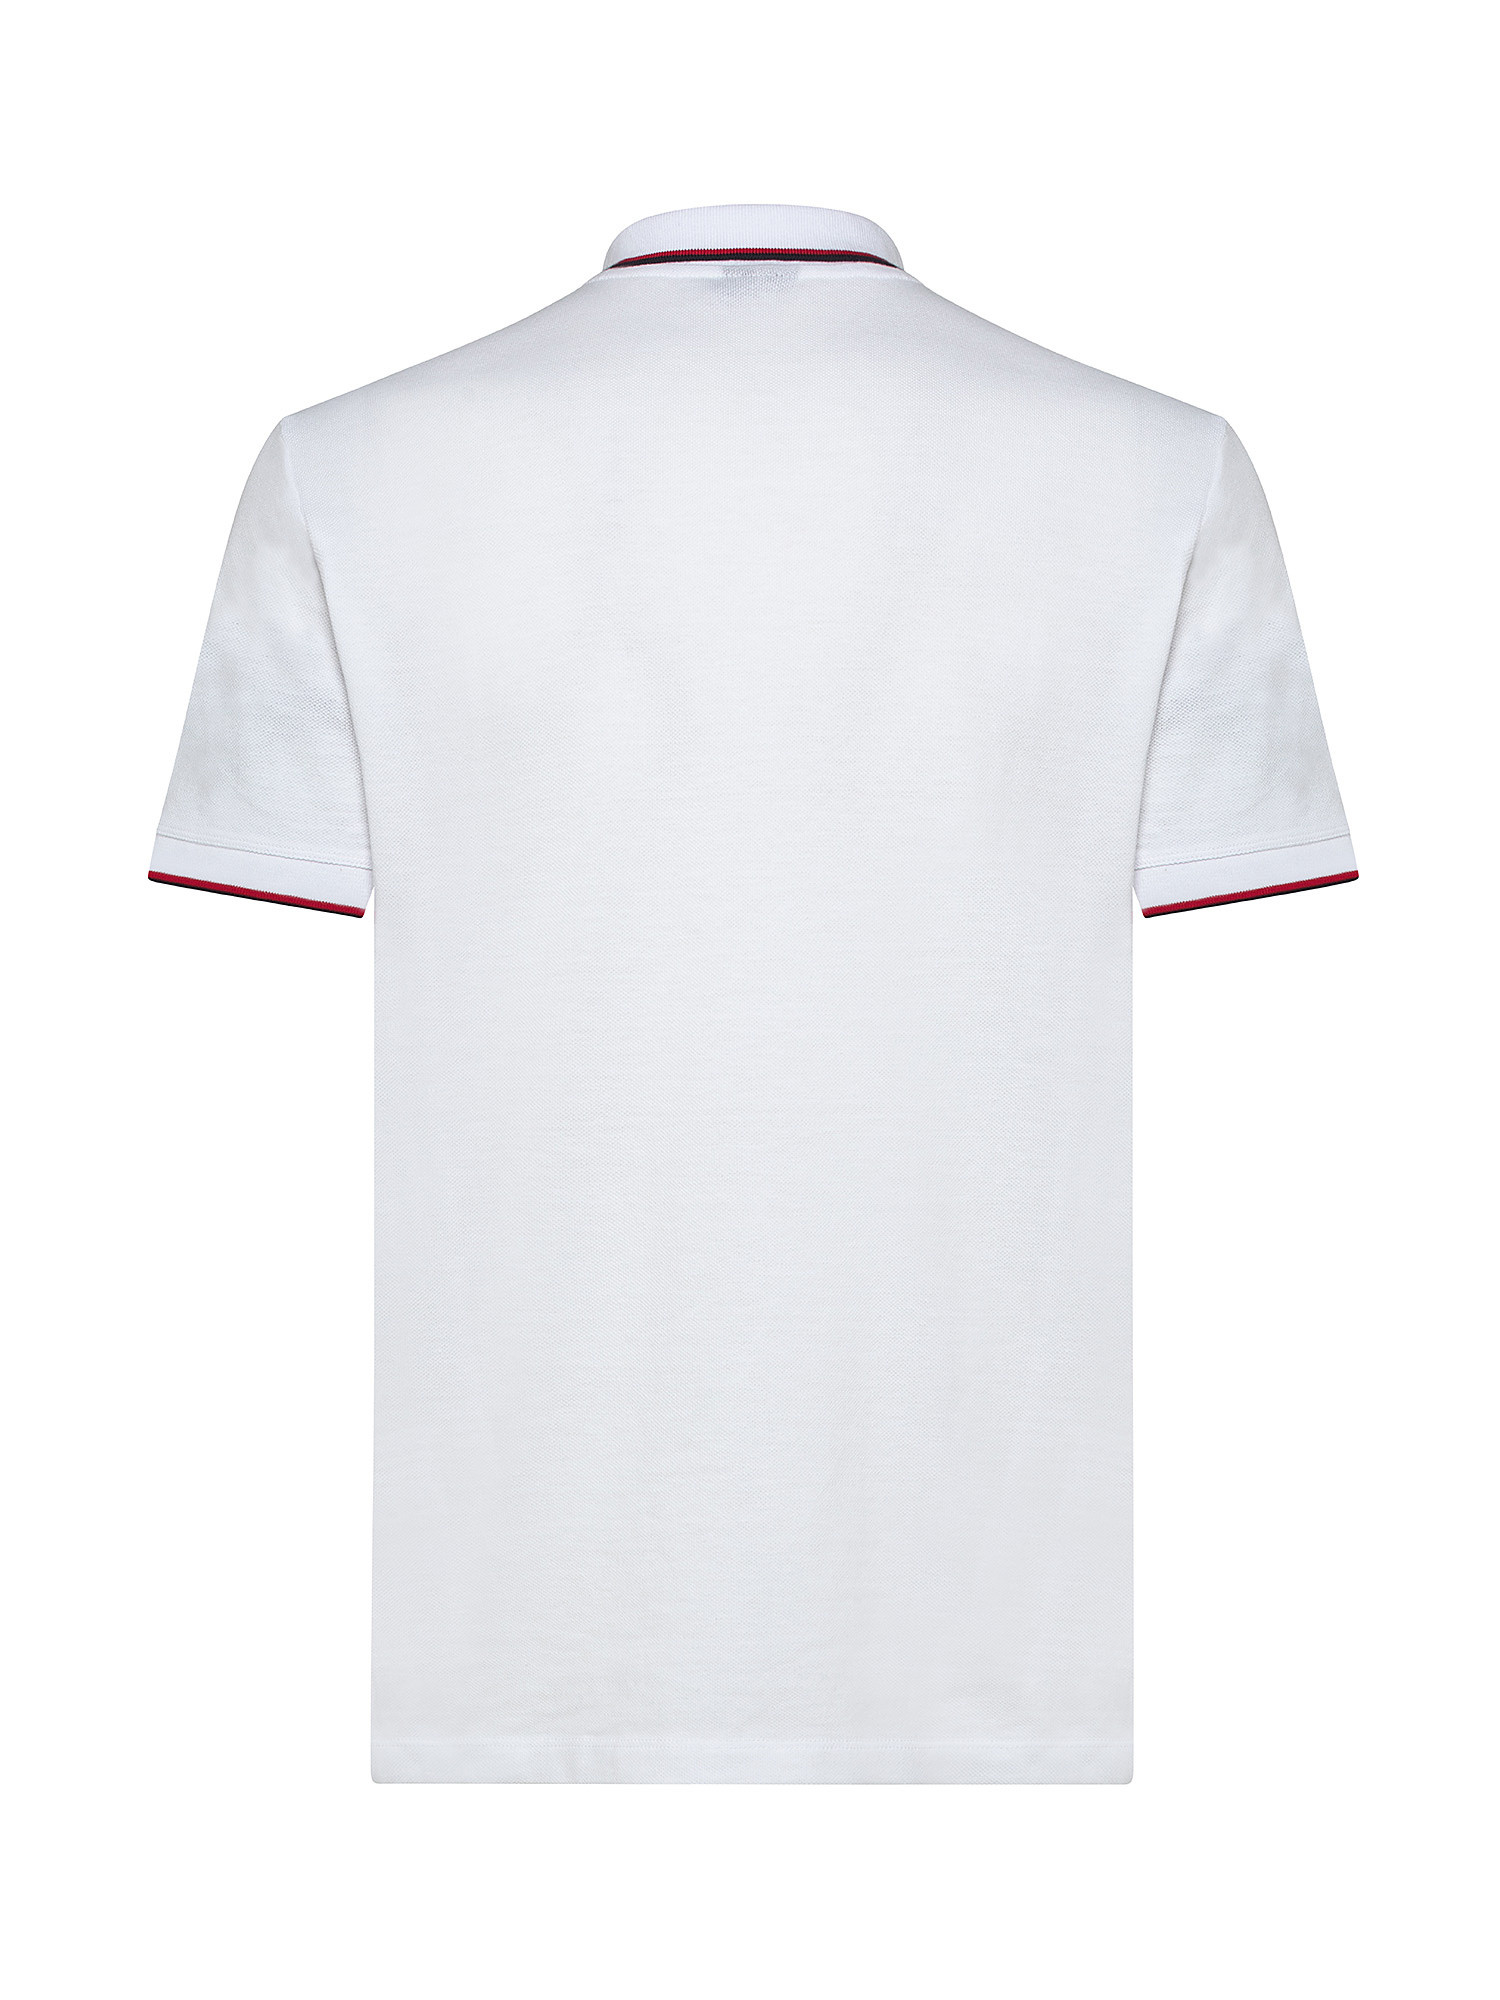 Polo shirt, White, large image number 1